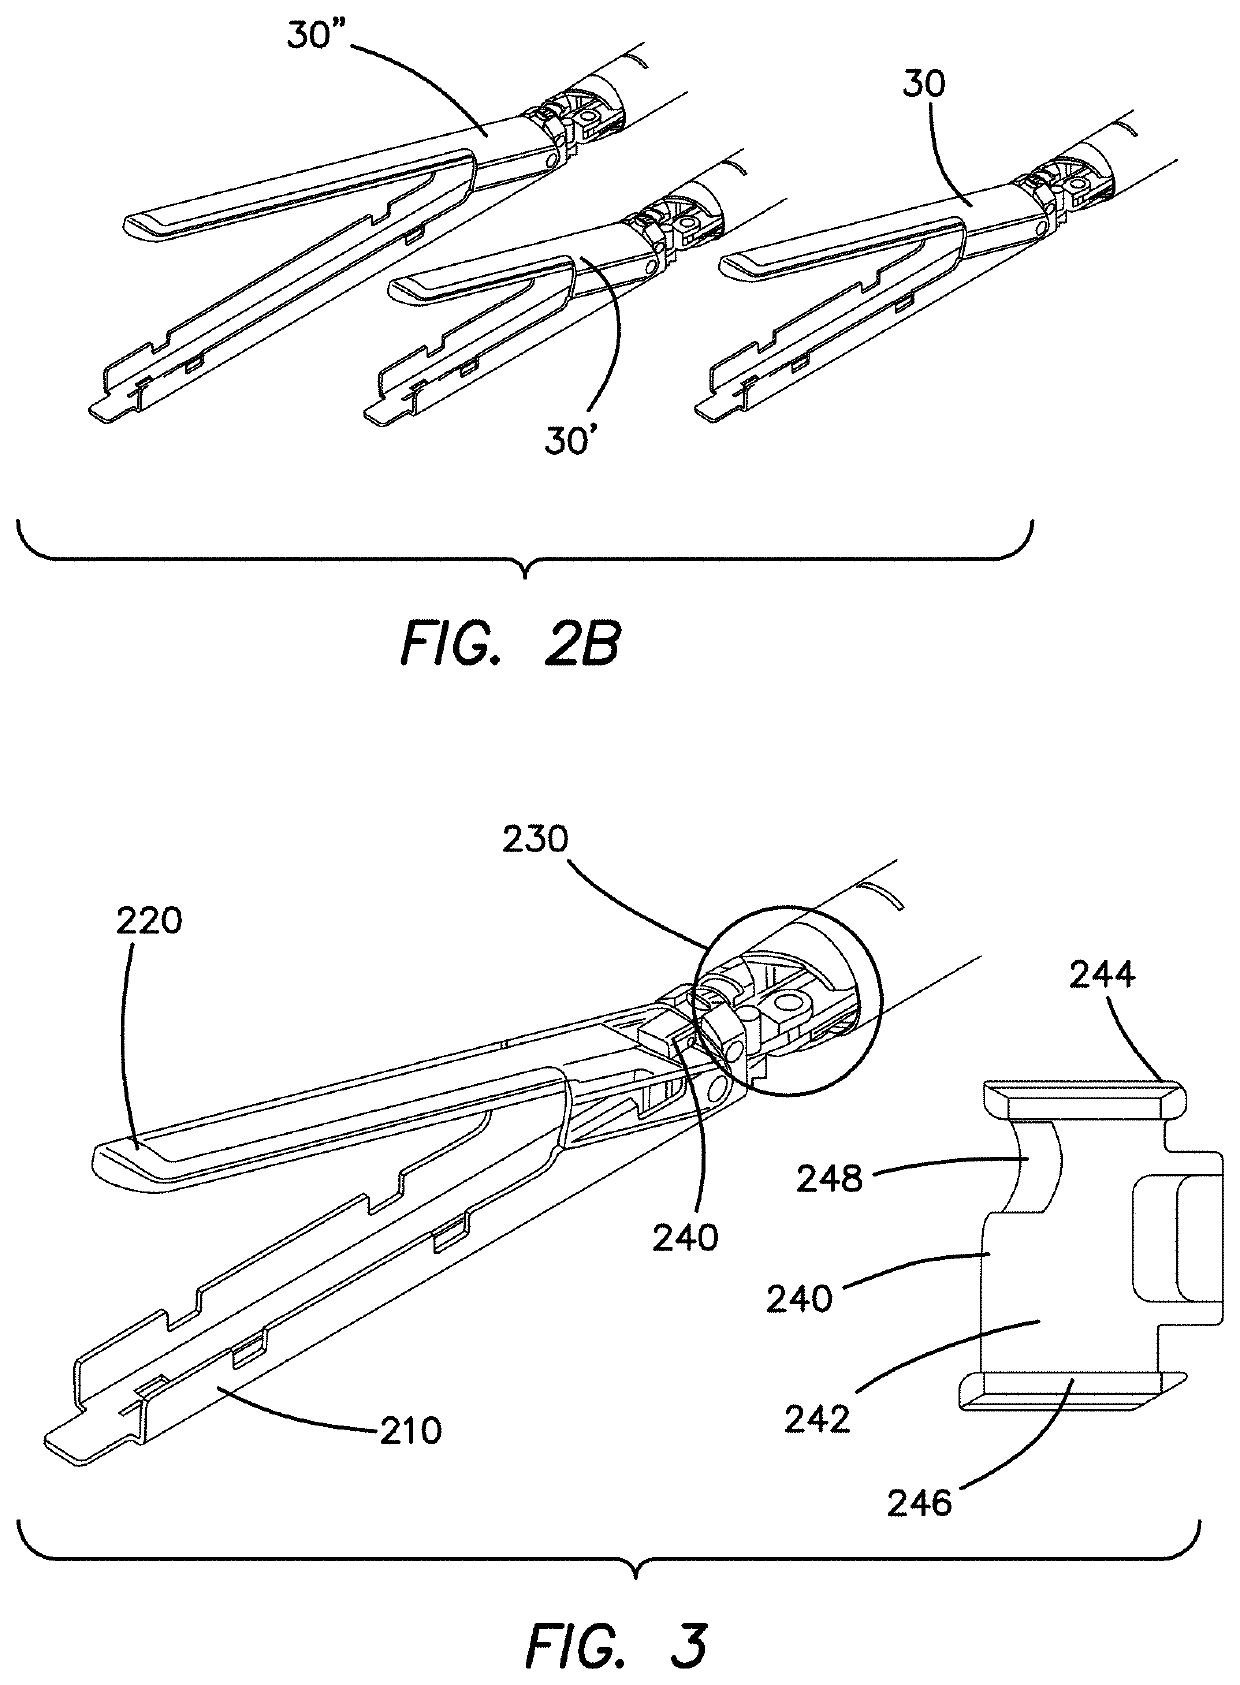 Reload shaft assembly for surgical stapler